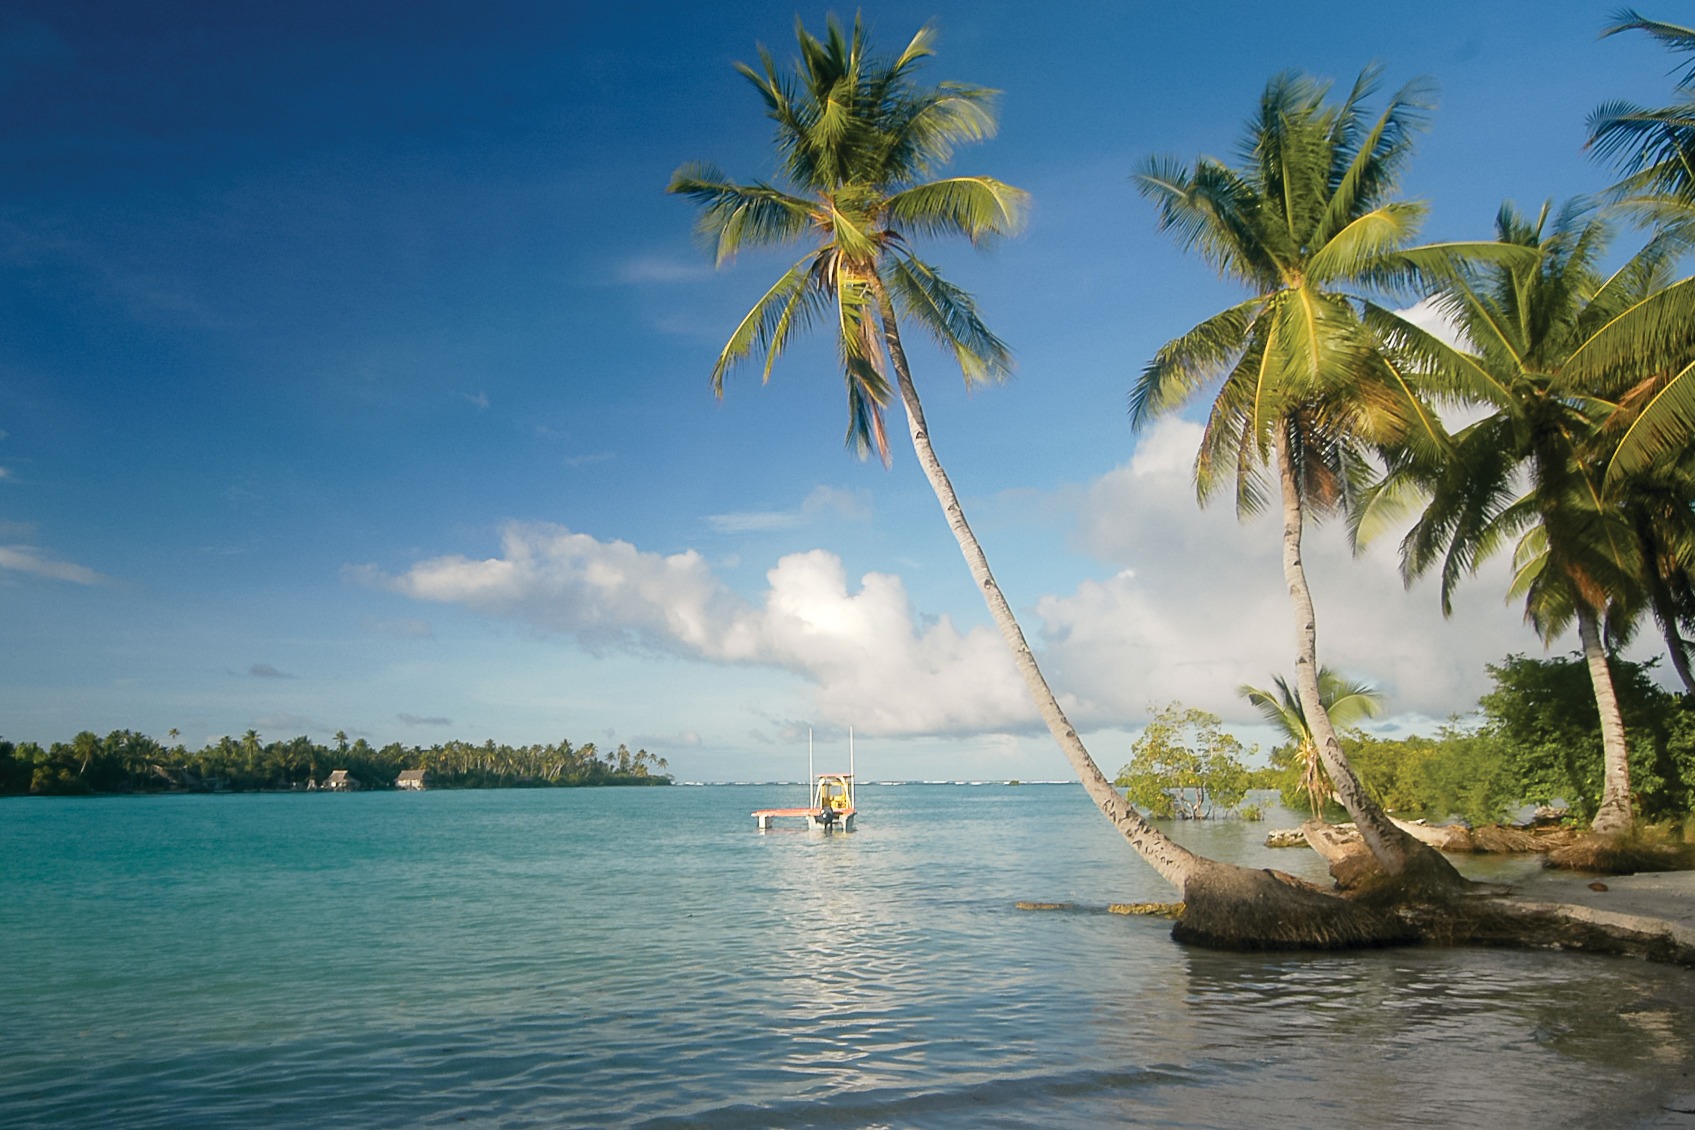 Destination Kiribati - Pacific Island Living - Travel & Tourism Guide